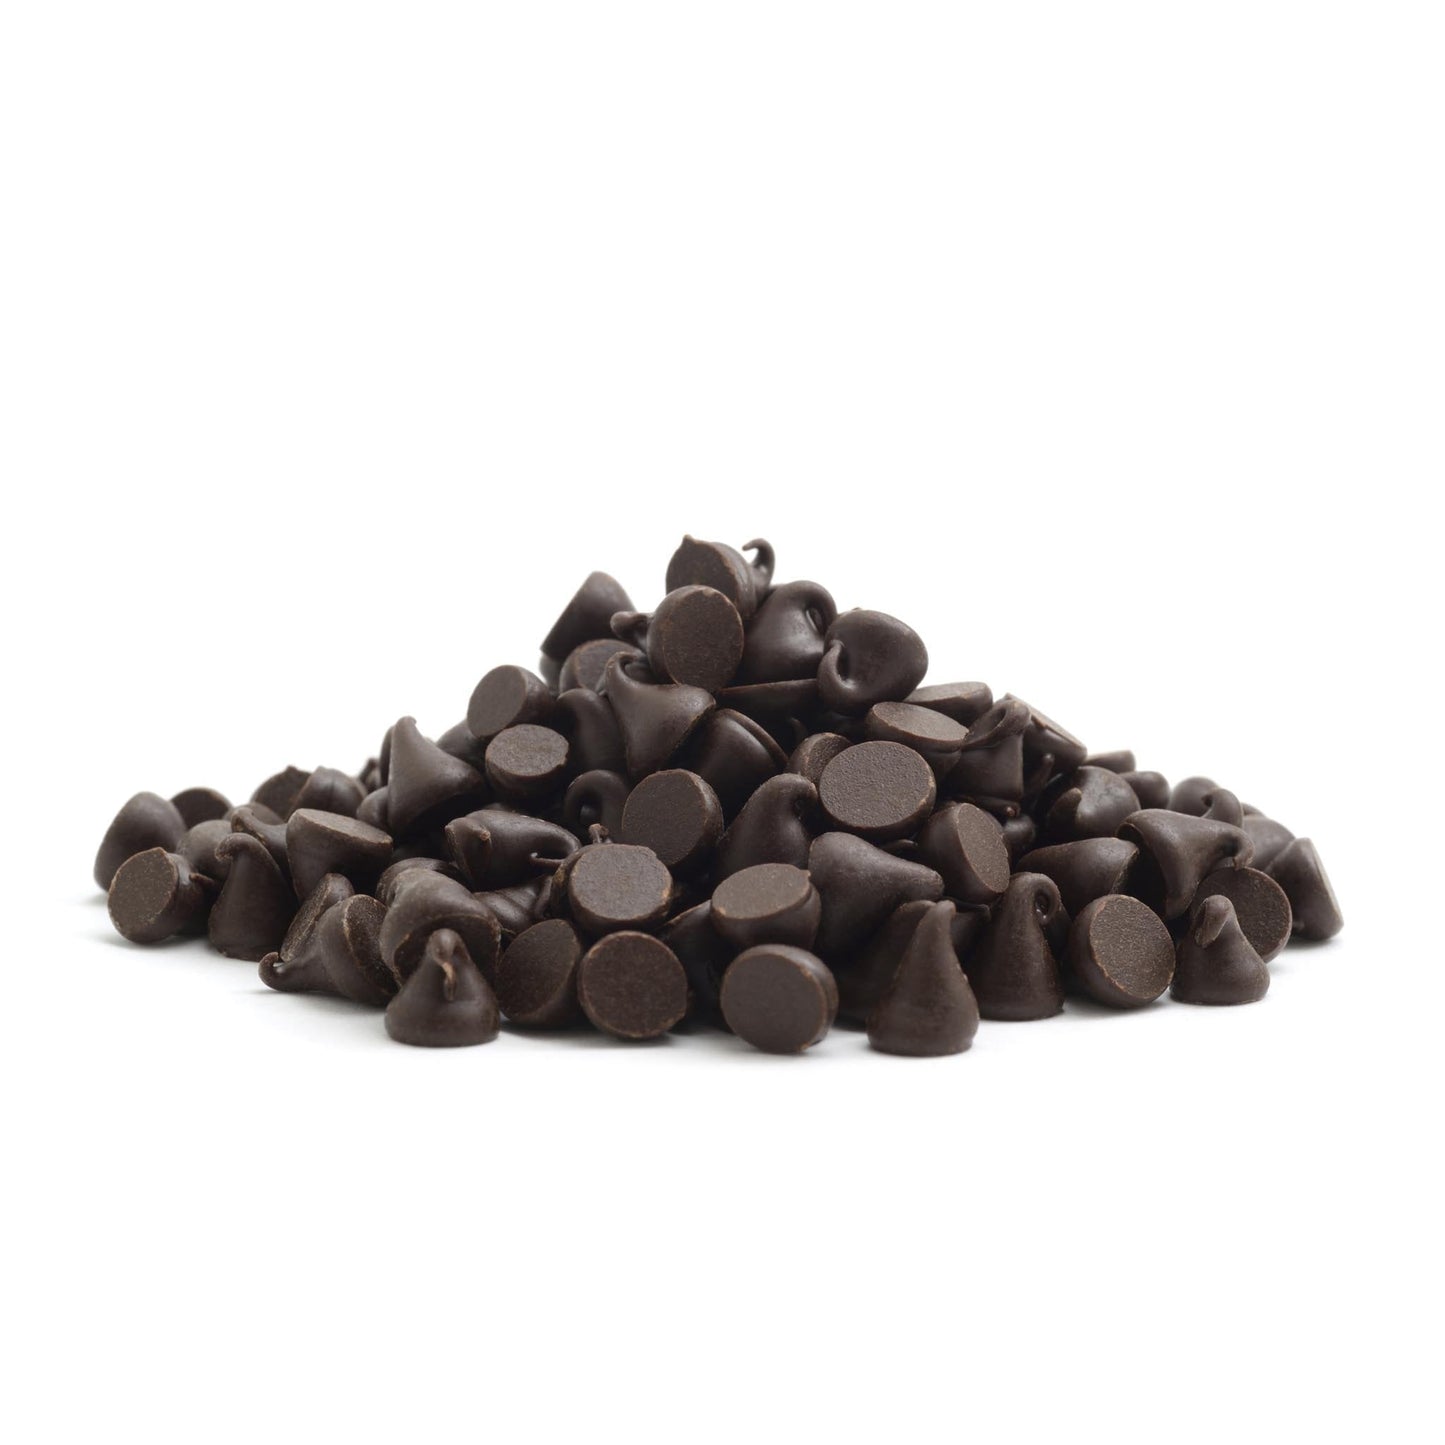 5LB Sugar-Free Maltitol Sweetened Dark Chocolate Drops (Compound Chocolate)